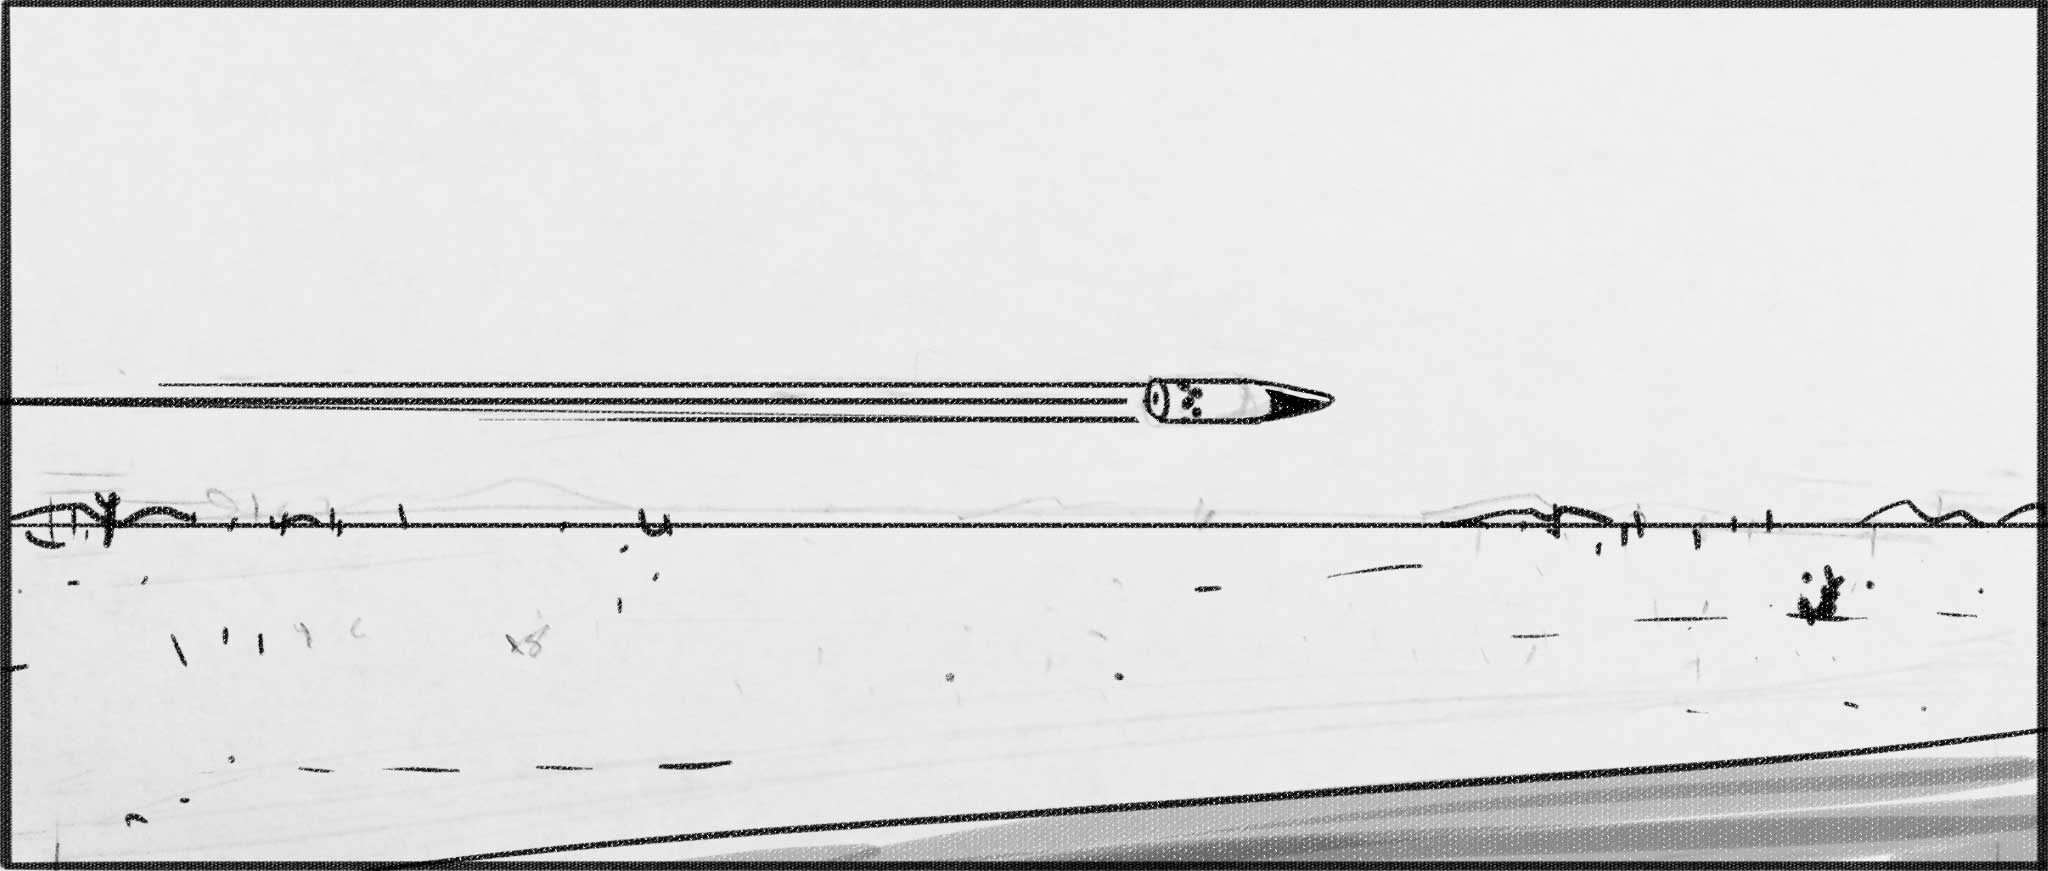 doa 01 storyboard 29 - Jasey Crowl Draws